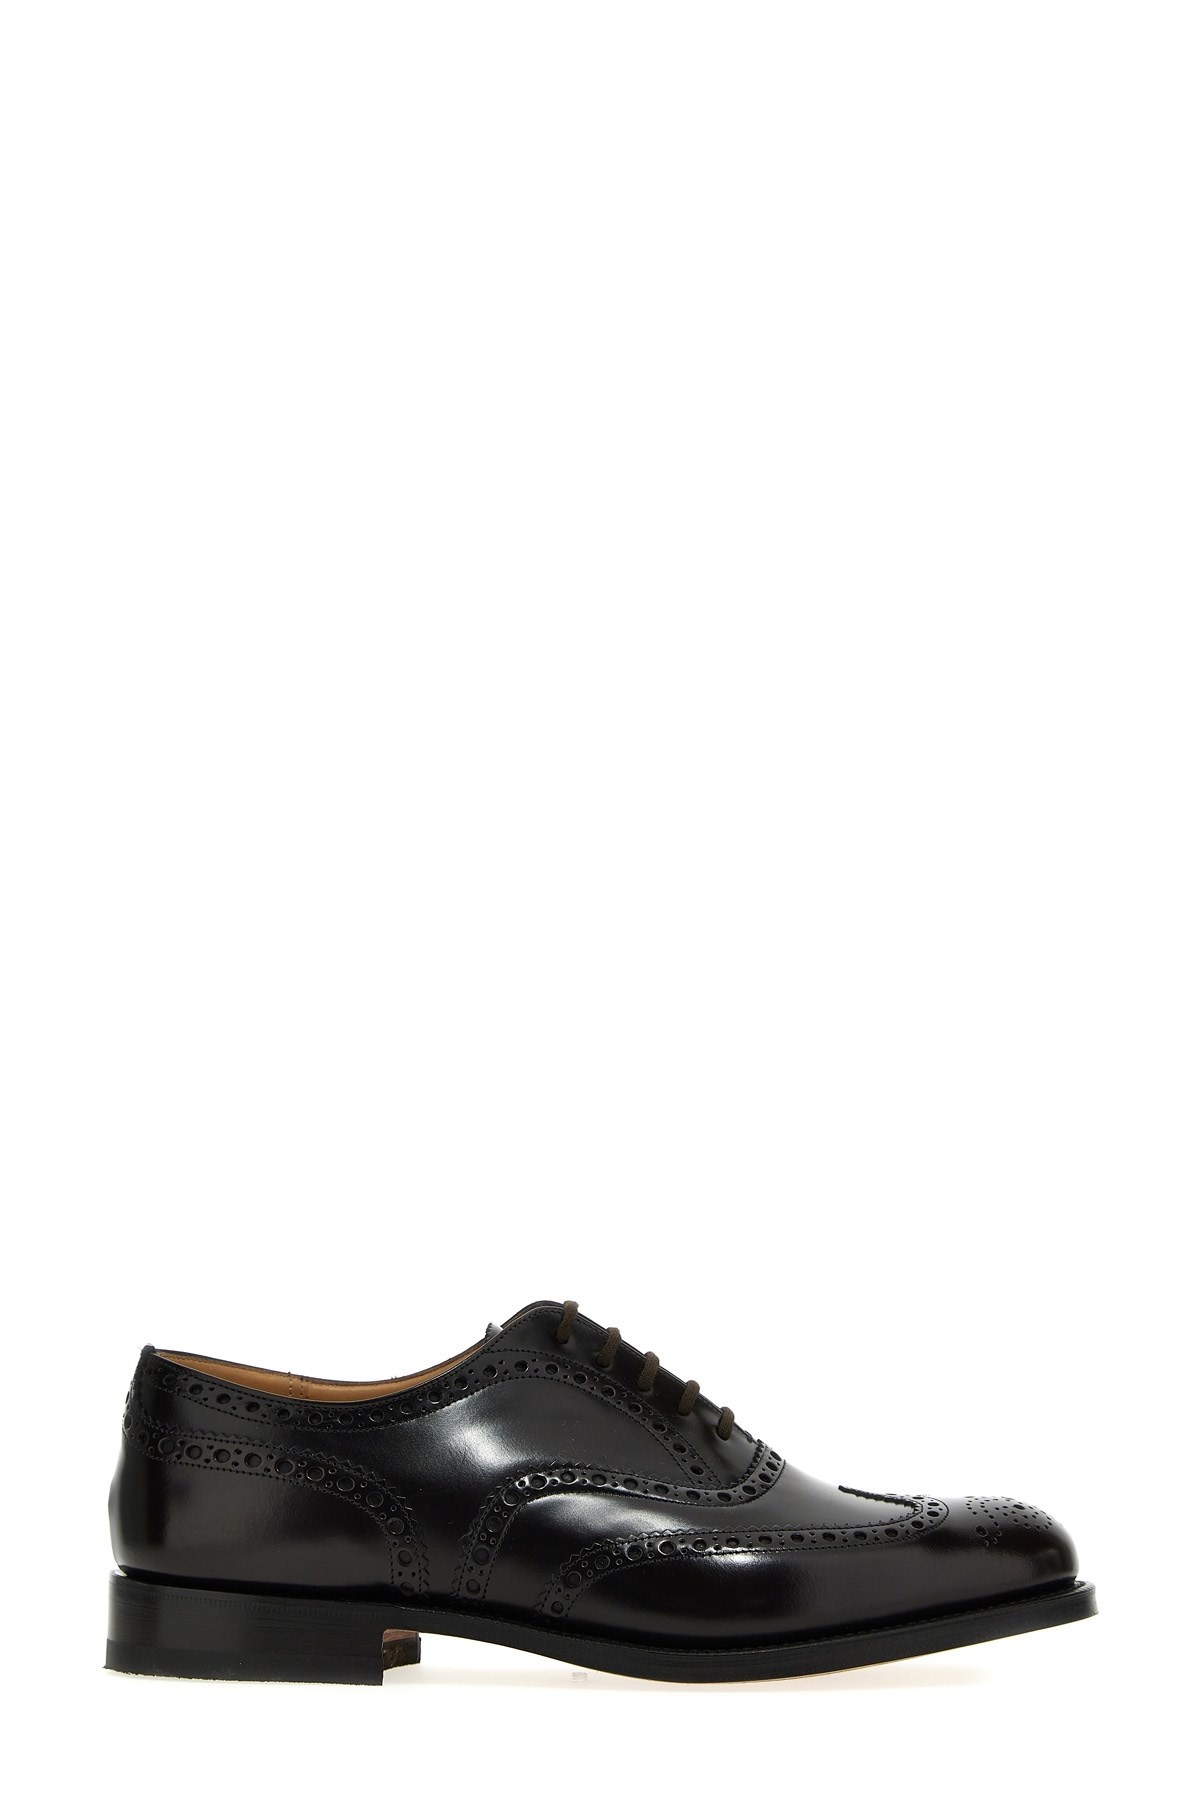 'Burwood' lace up shoes - 1